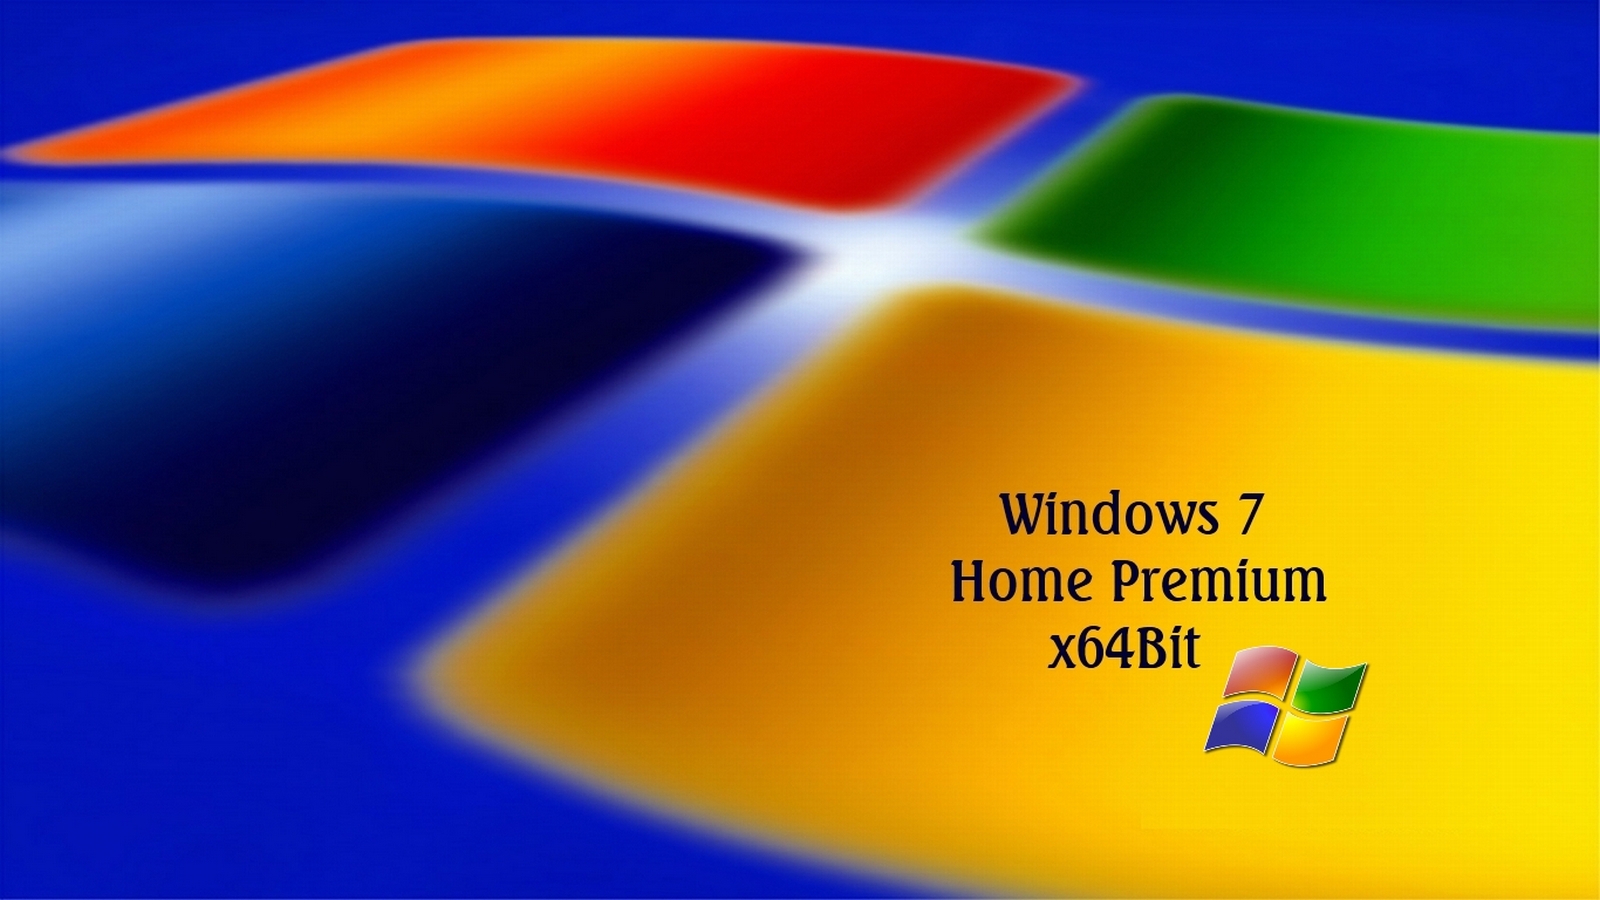 Win7 Home Premium 64bit Wallpaper